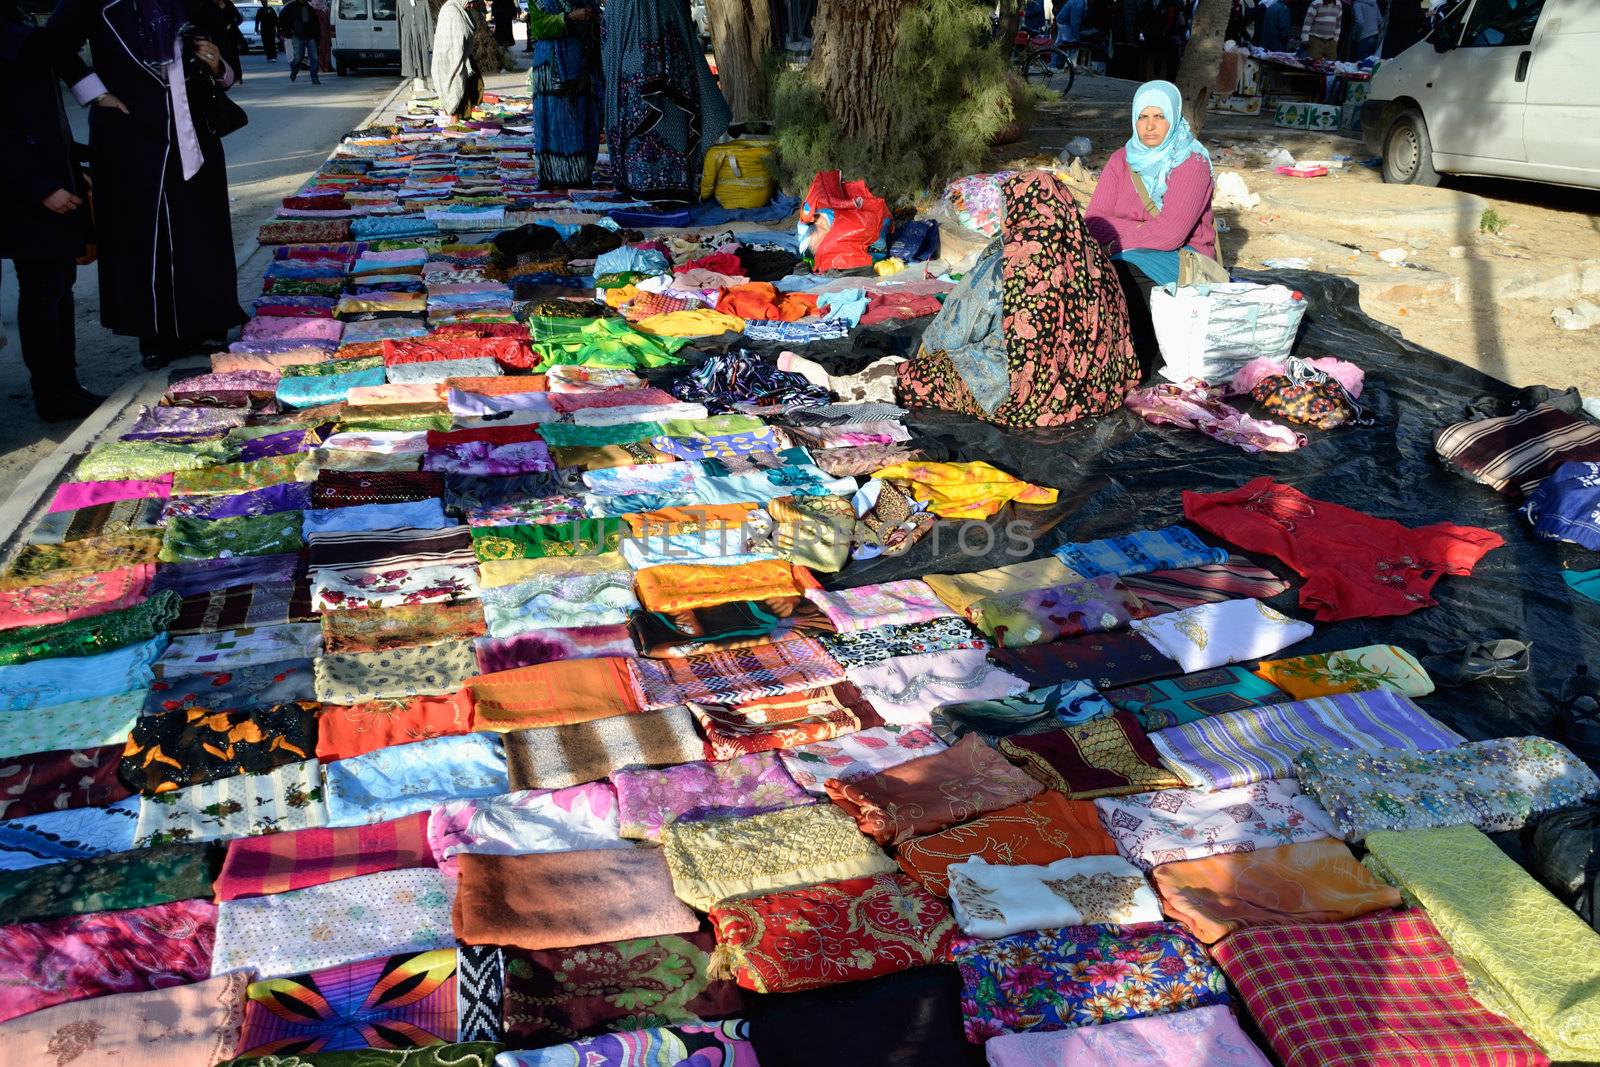 Market in Tunisia by fahrner